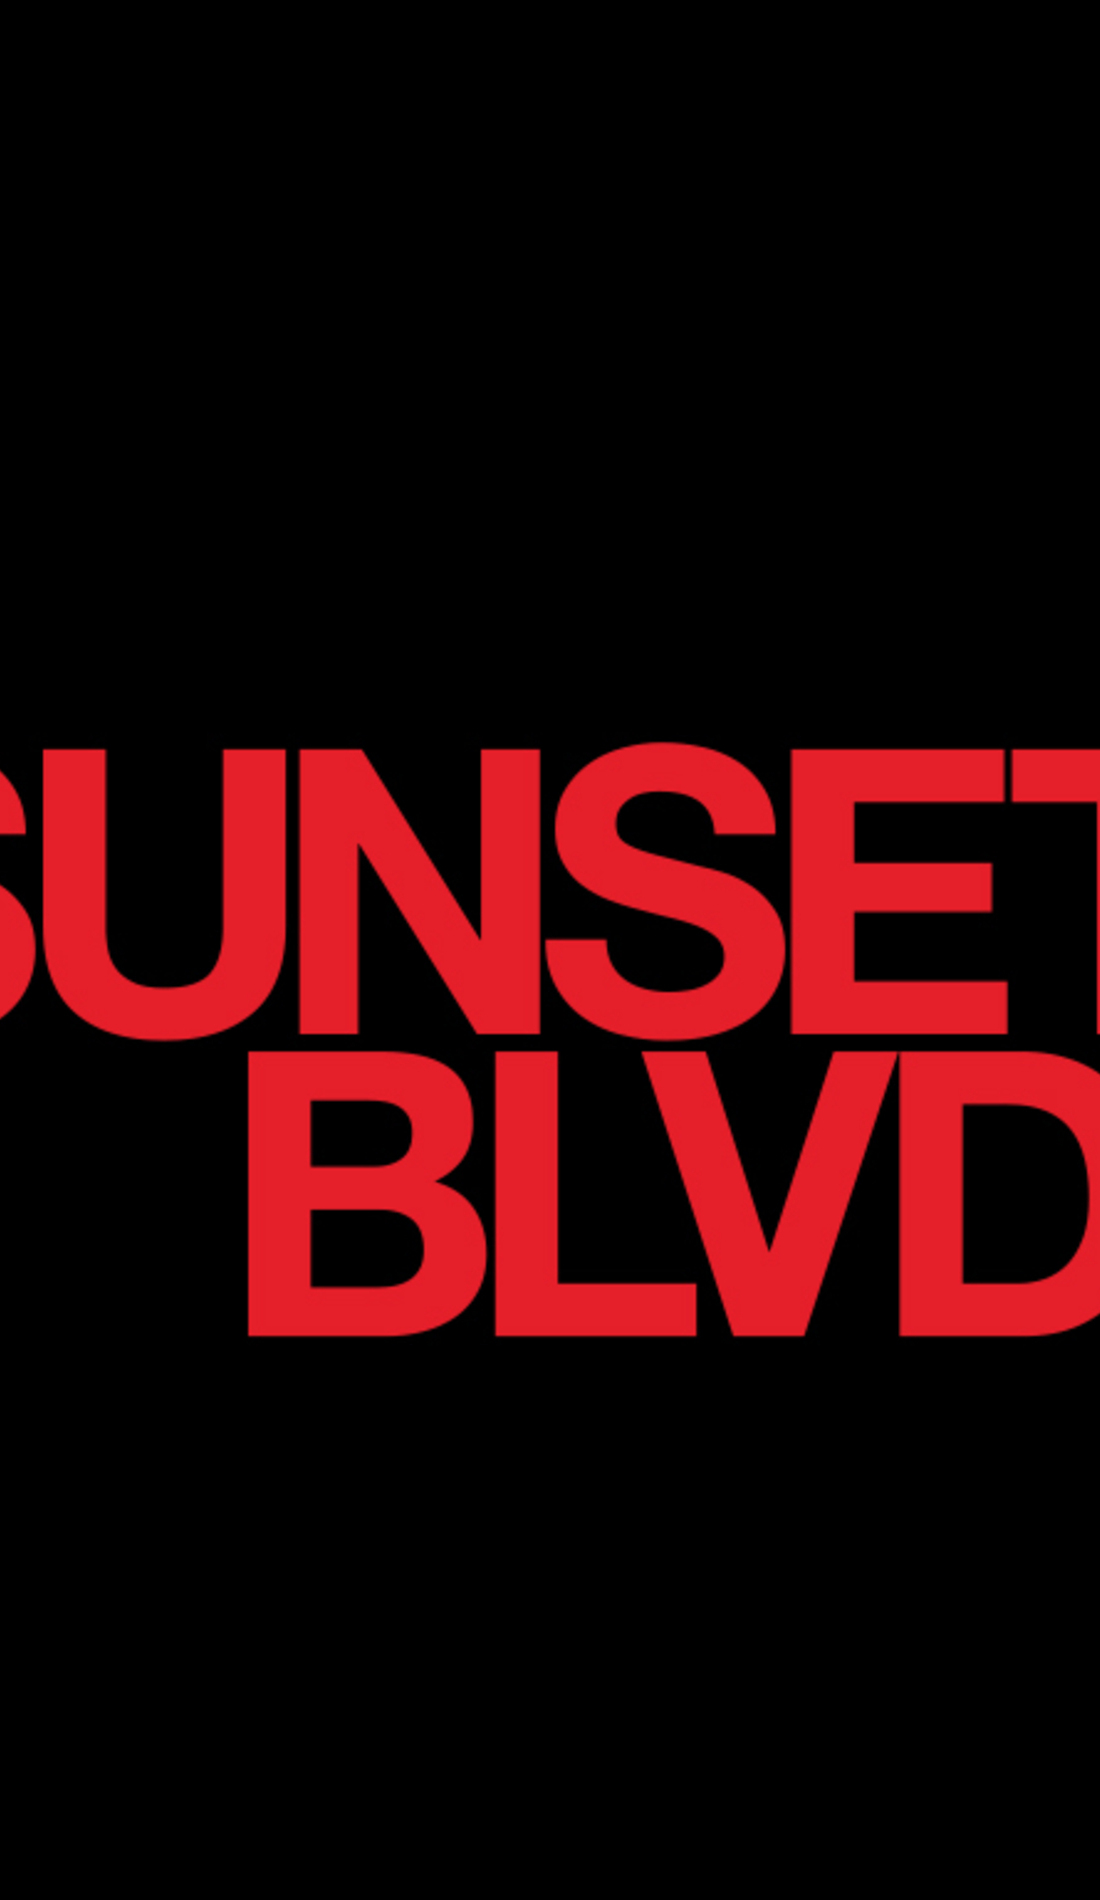 A Sunset Boulevard live event